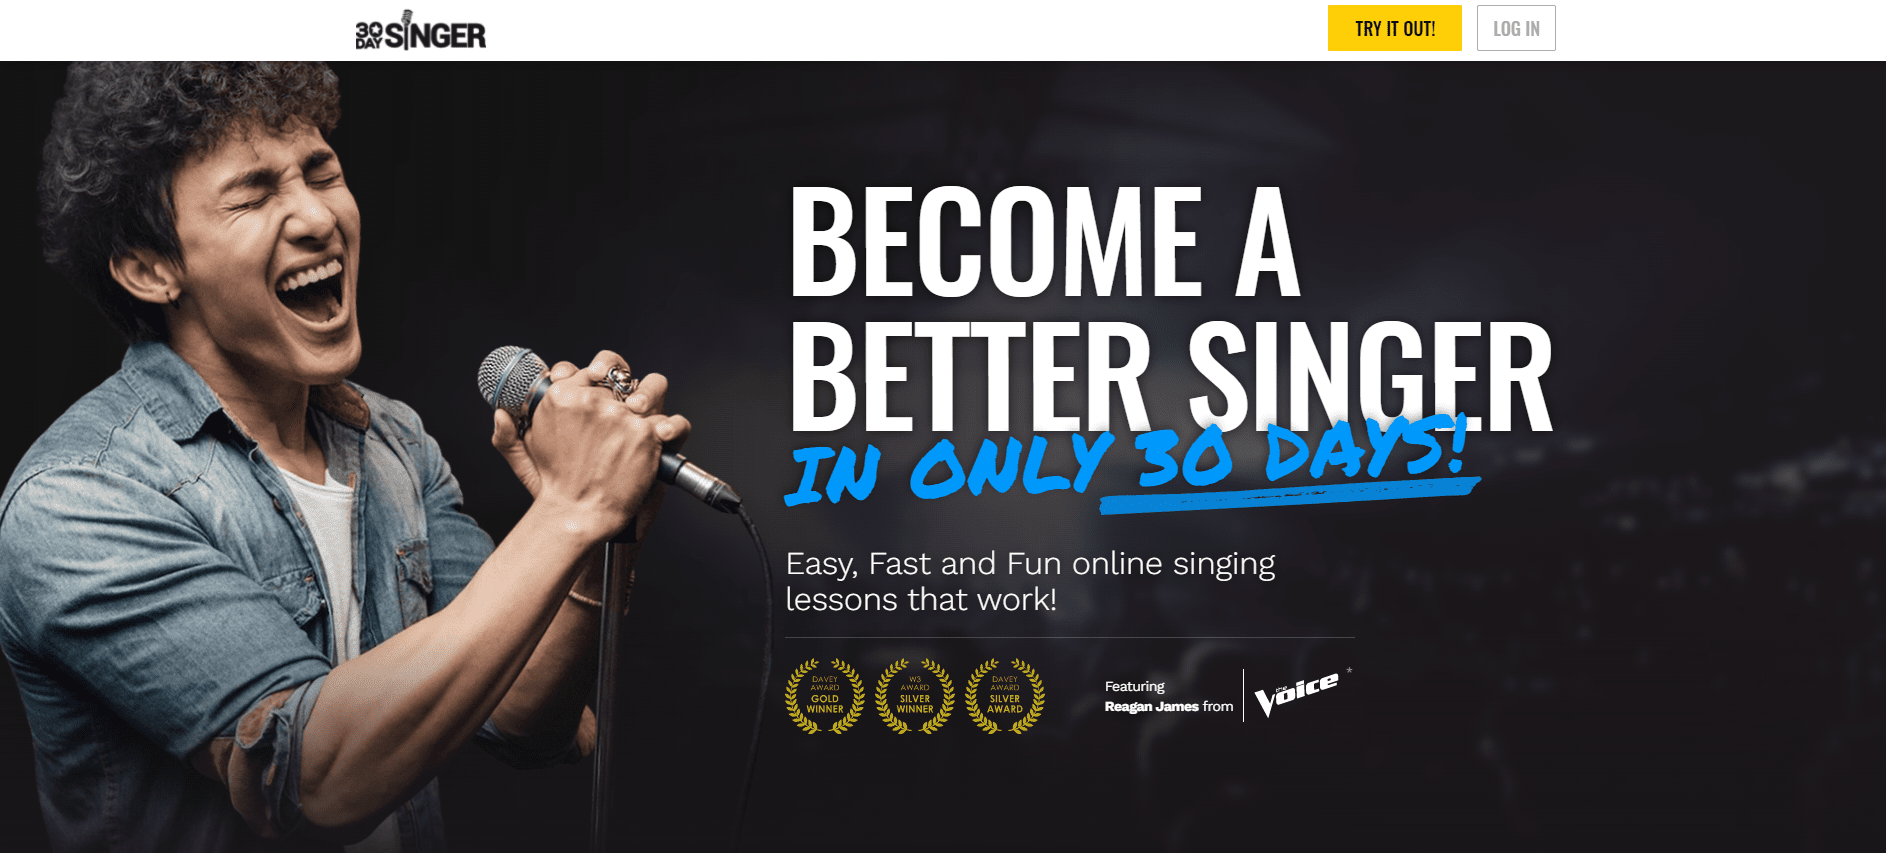 30 Day Singer - Best Online Singing Lessons